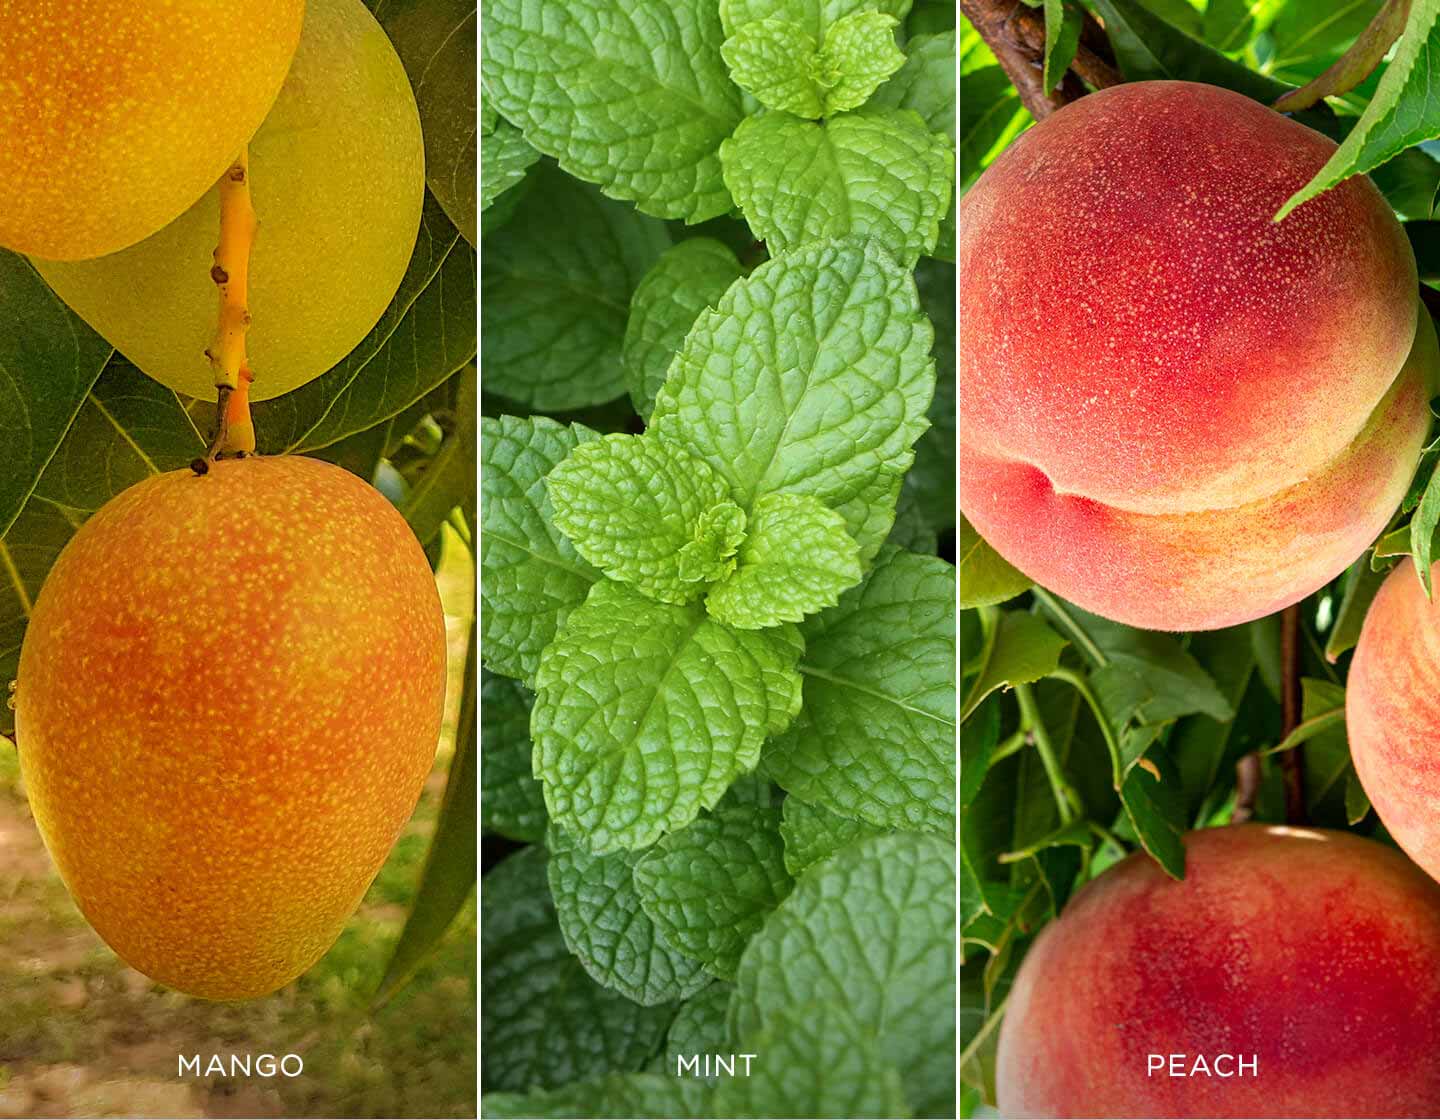 Green Mango Peach Ingredients: Mango, Mint and Peach